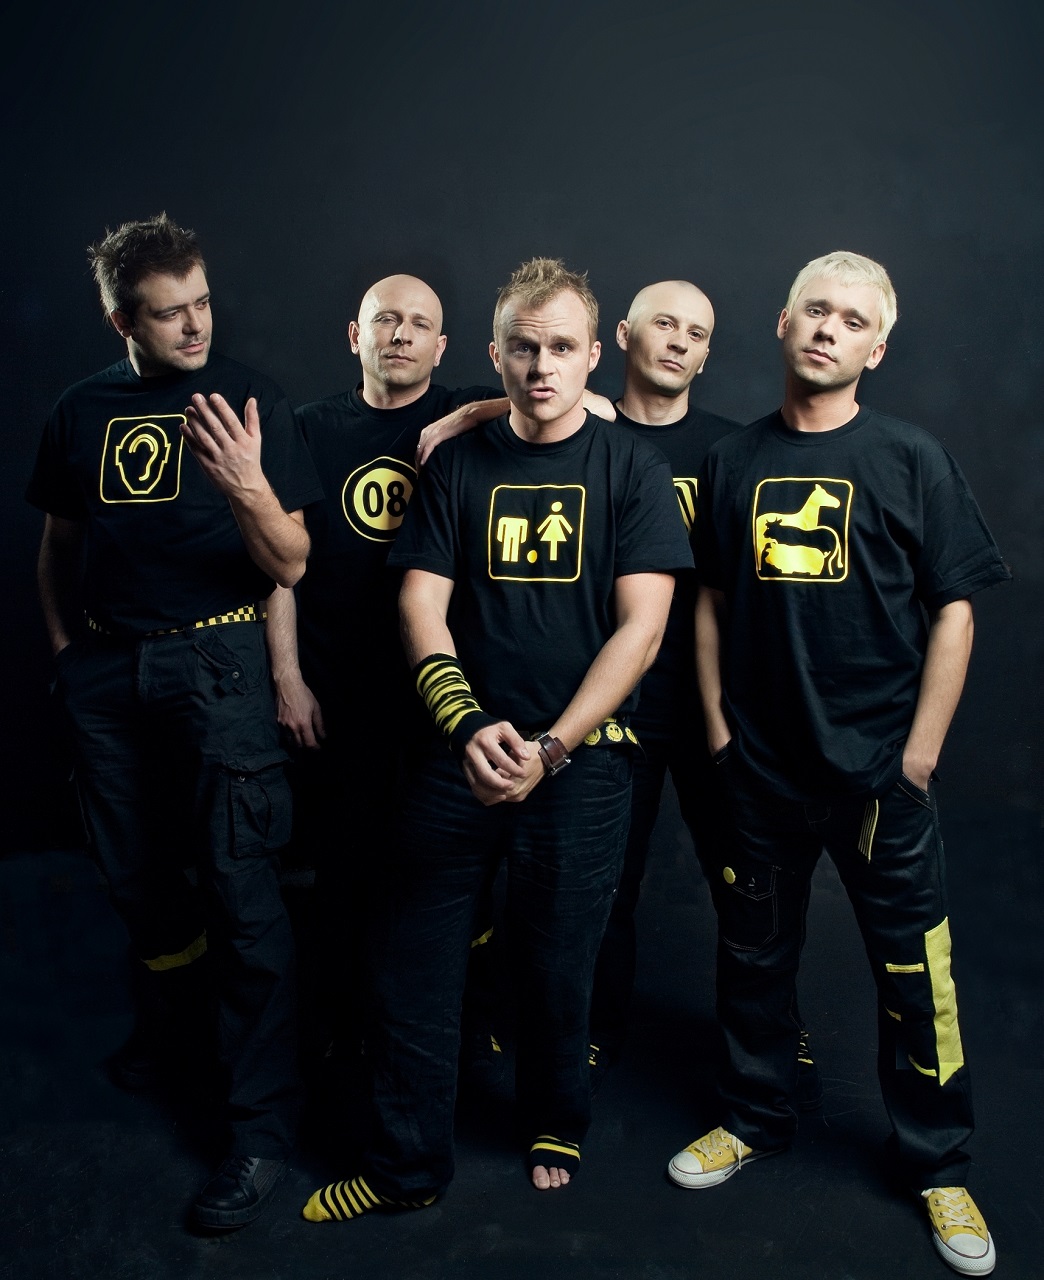 People 1044x1280 Coma (band) band rocks Polish Poland men